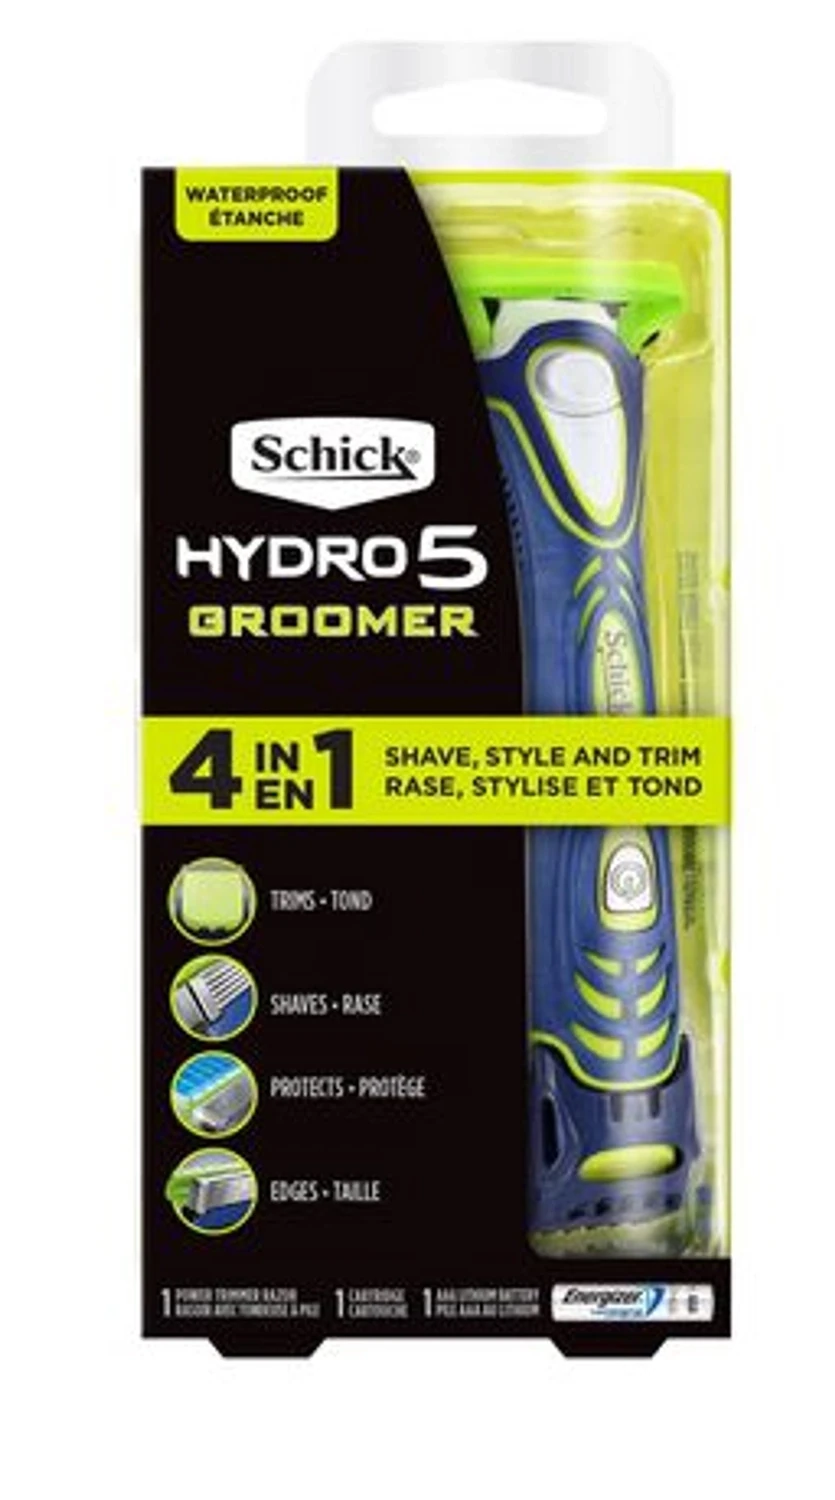 Schick Hydro 5 Groomer 4 in 1, 1 Power Trimmer + 1 Cartridge